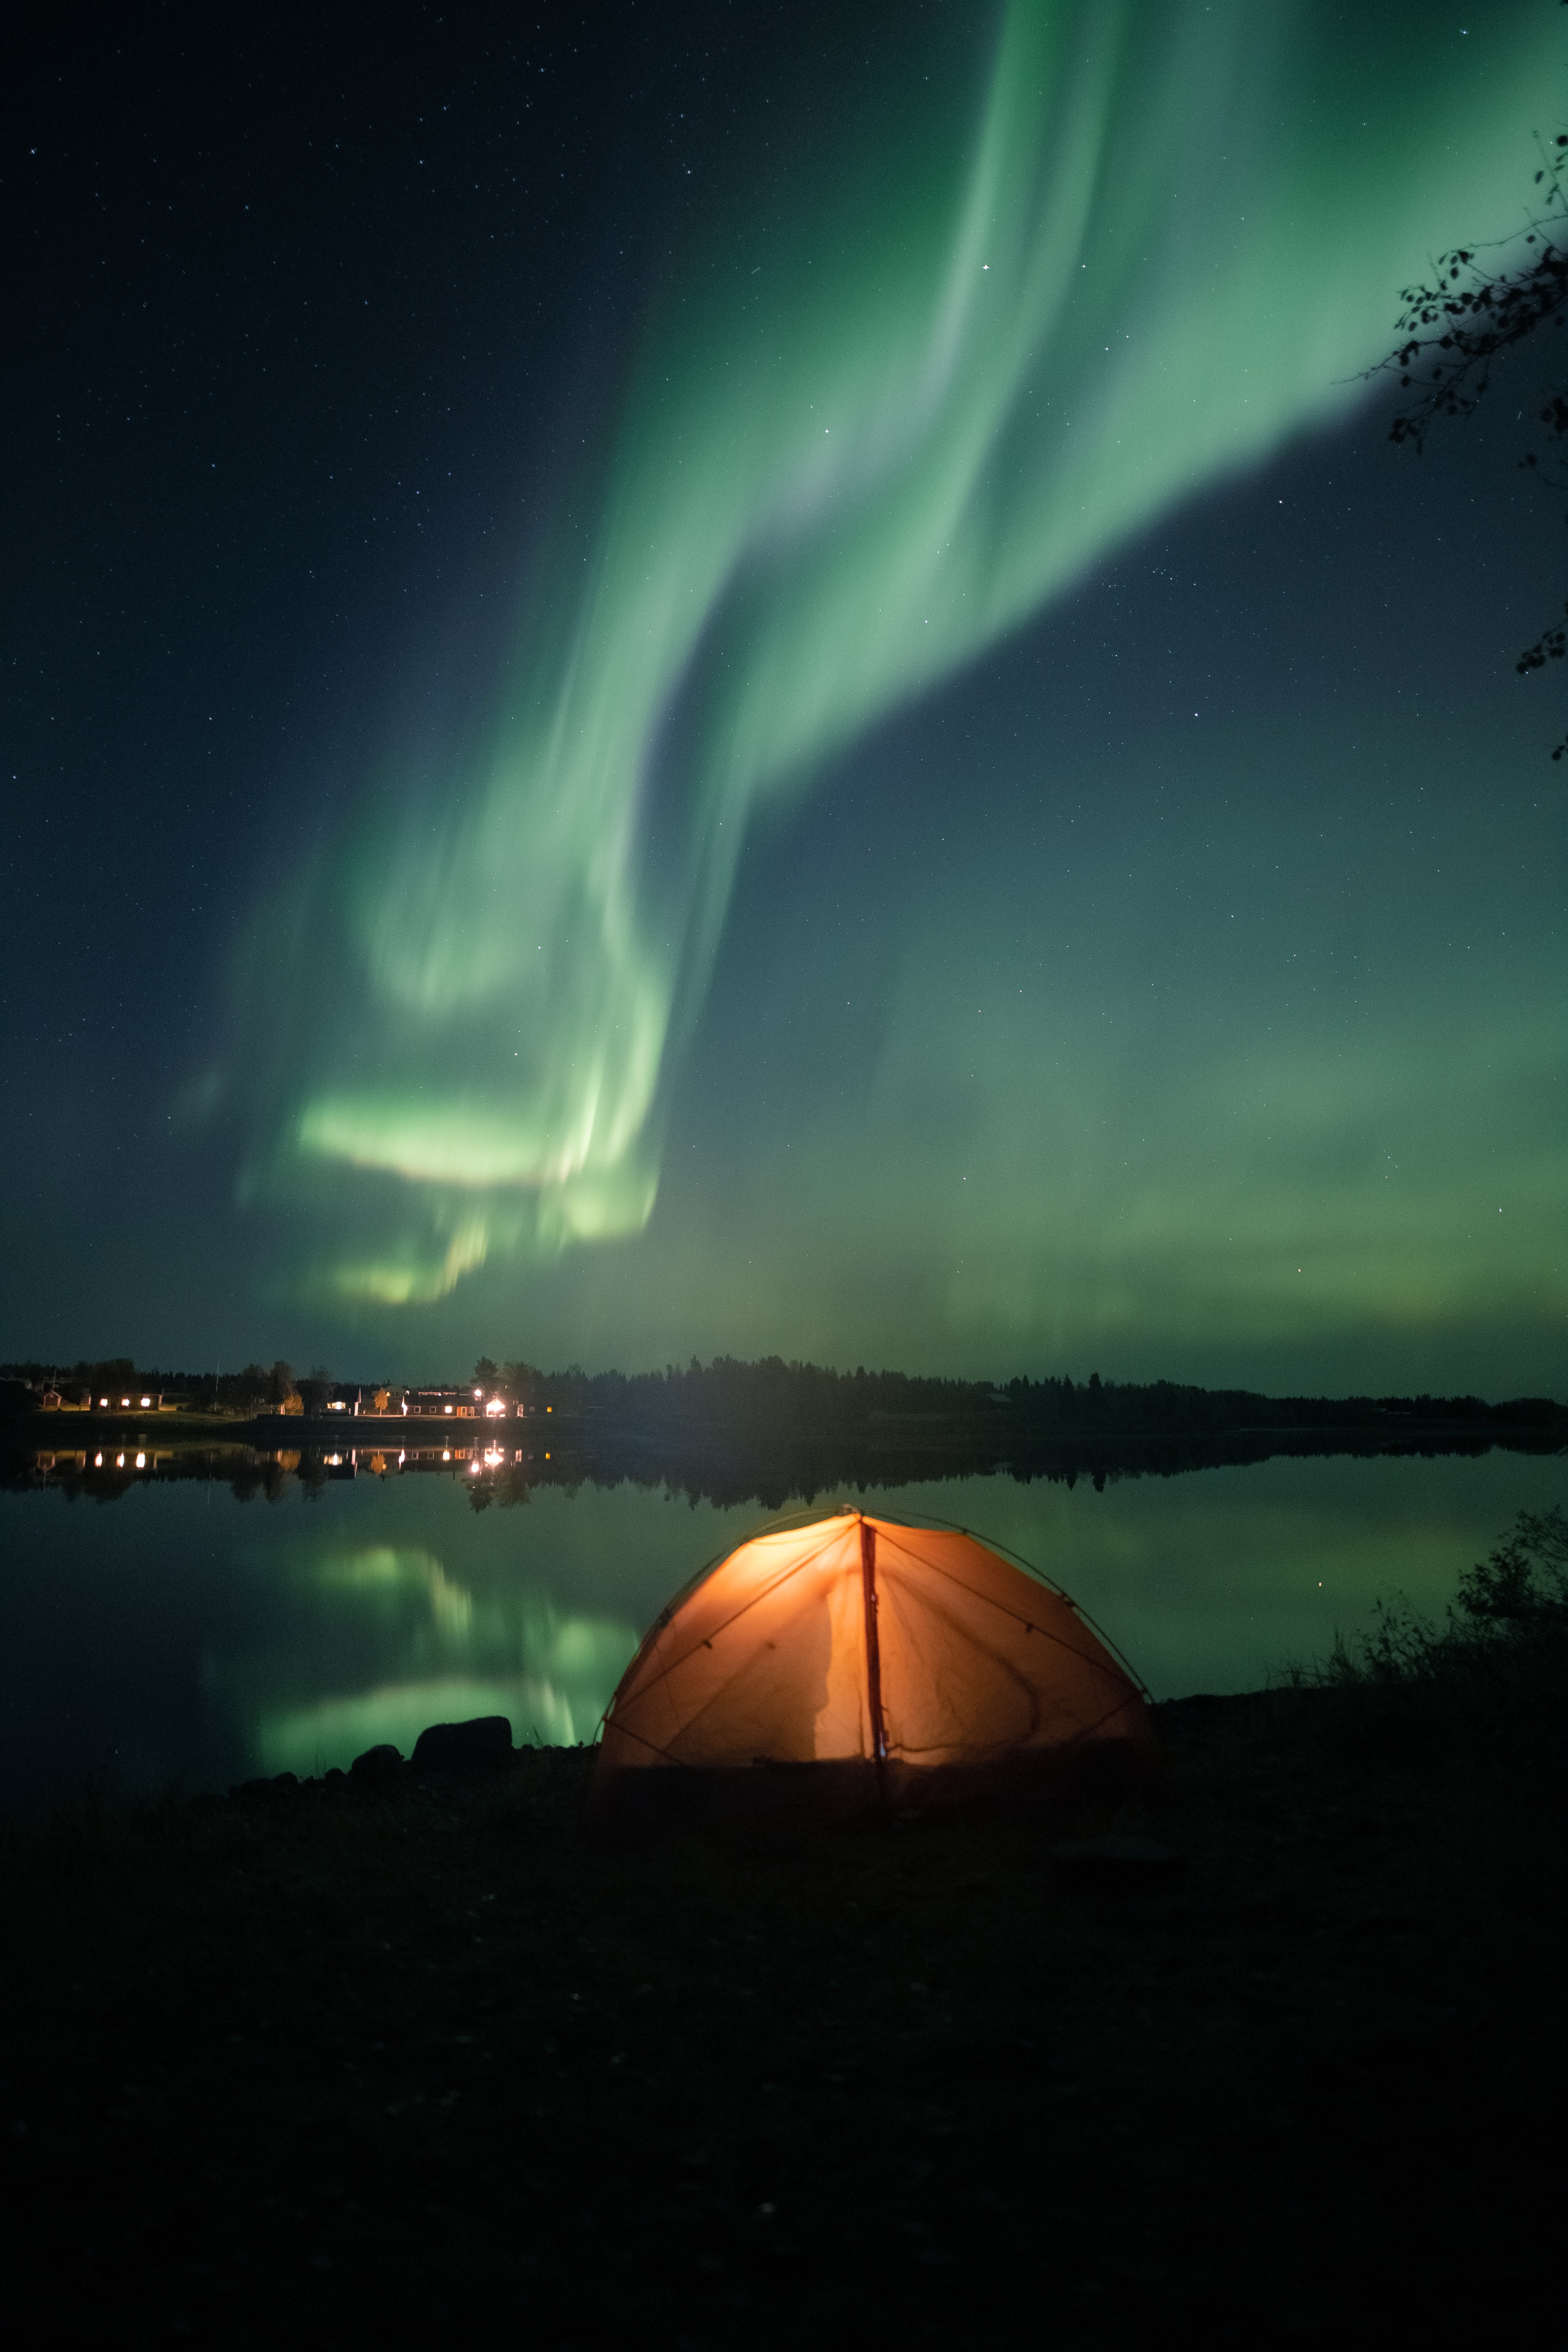 103592 baixar imagens noite, lago, escuro, acampamento, aurora boreal, barraca, tenda - papéis de parede e protetores de tela gratuitamente